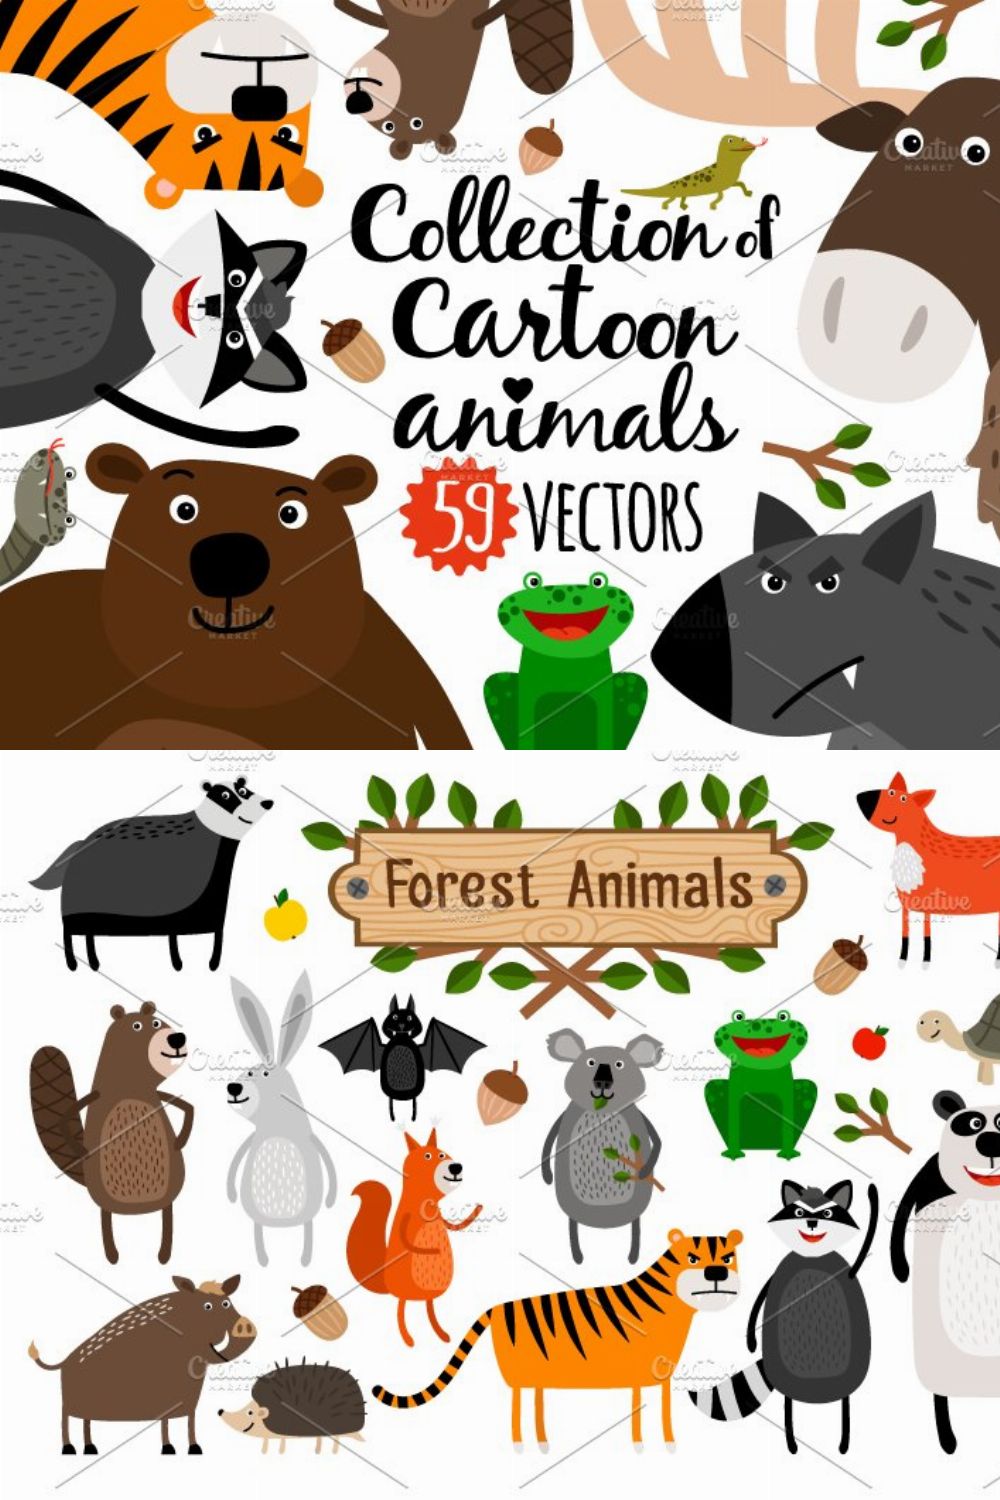 Cartoon Animals pinterest preview image.